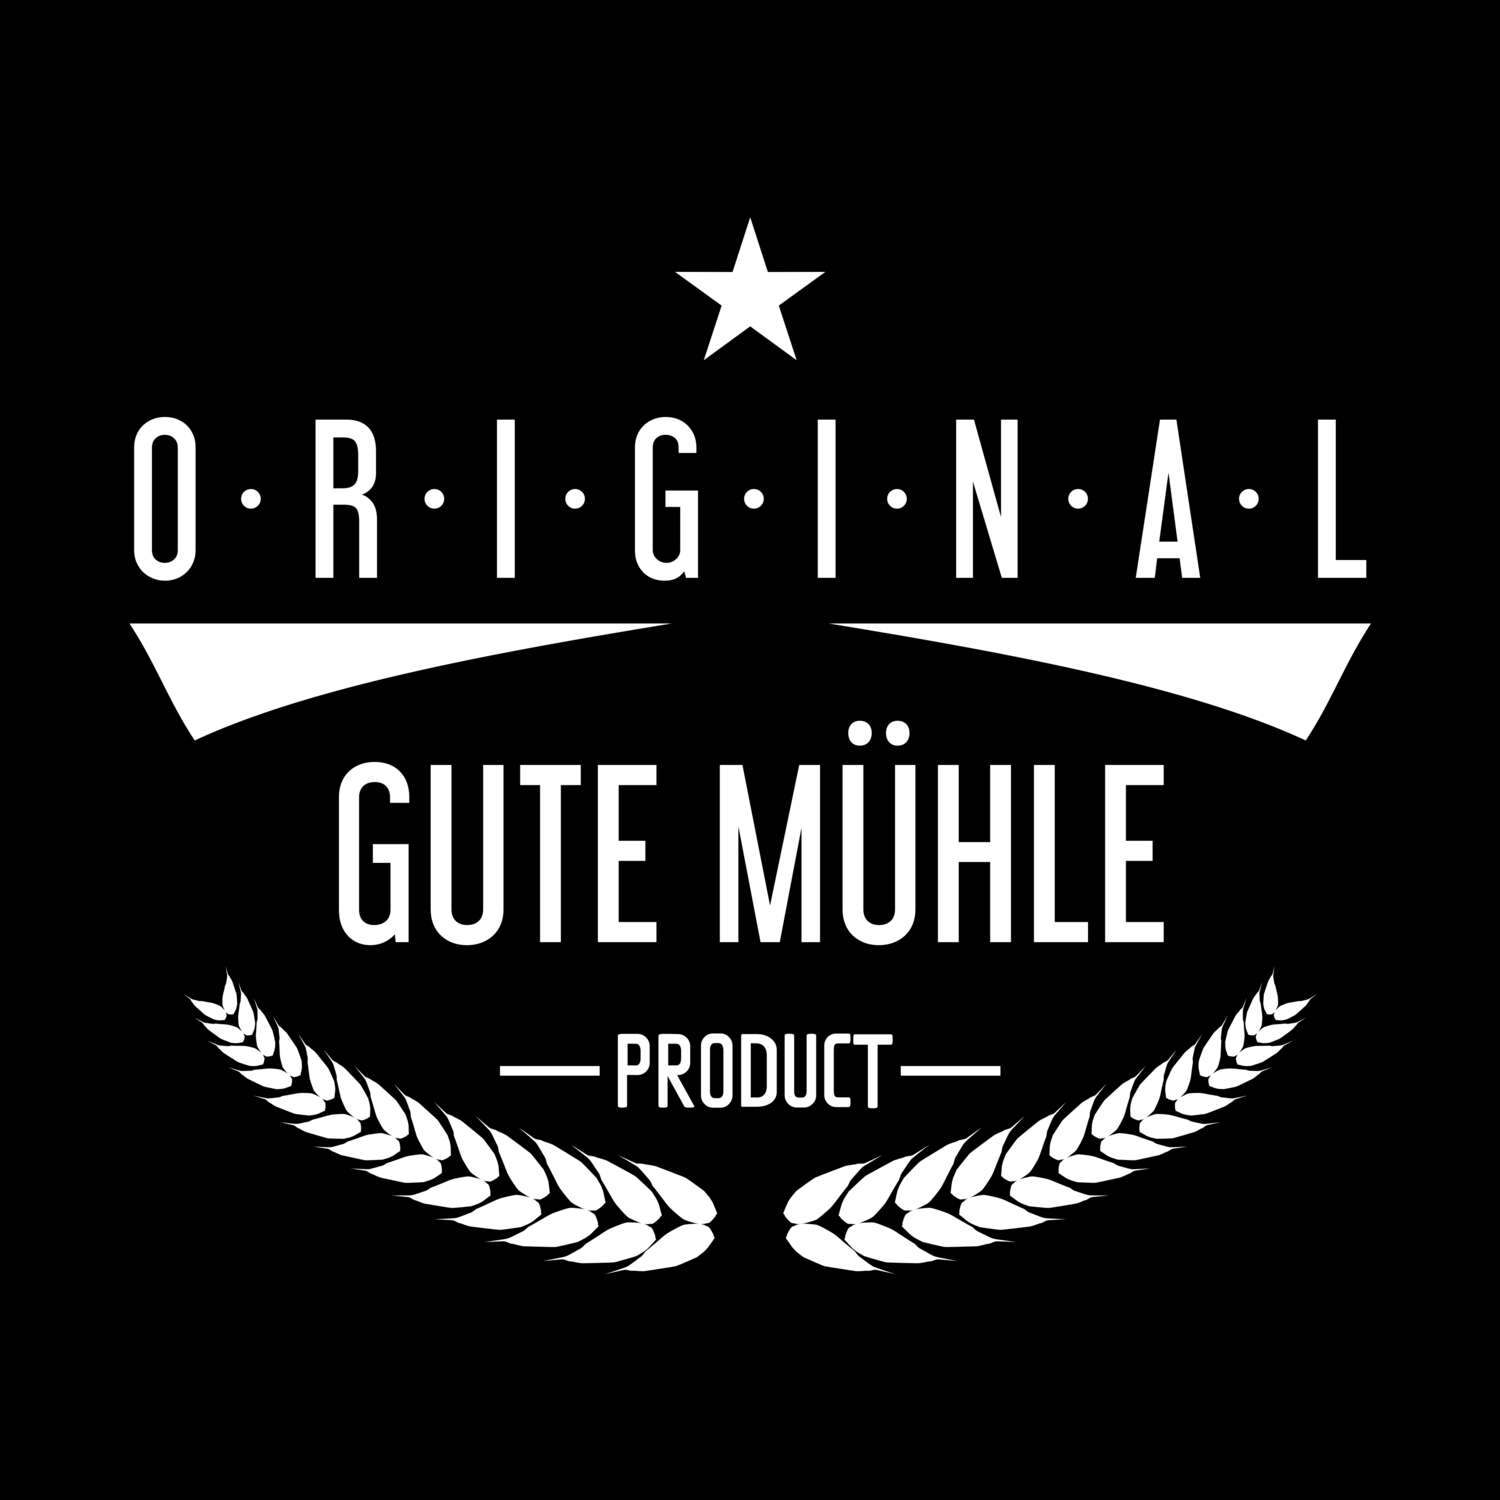 Gute Mühle T-Shirt »Original Product«